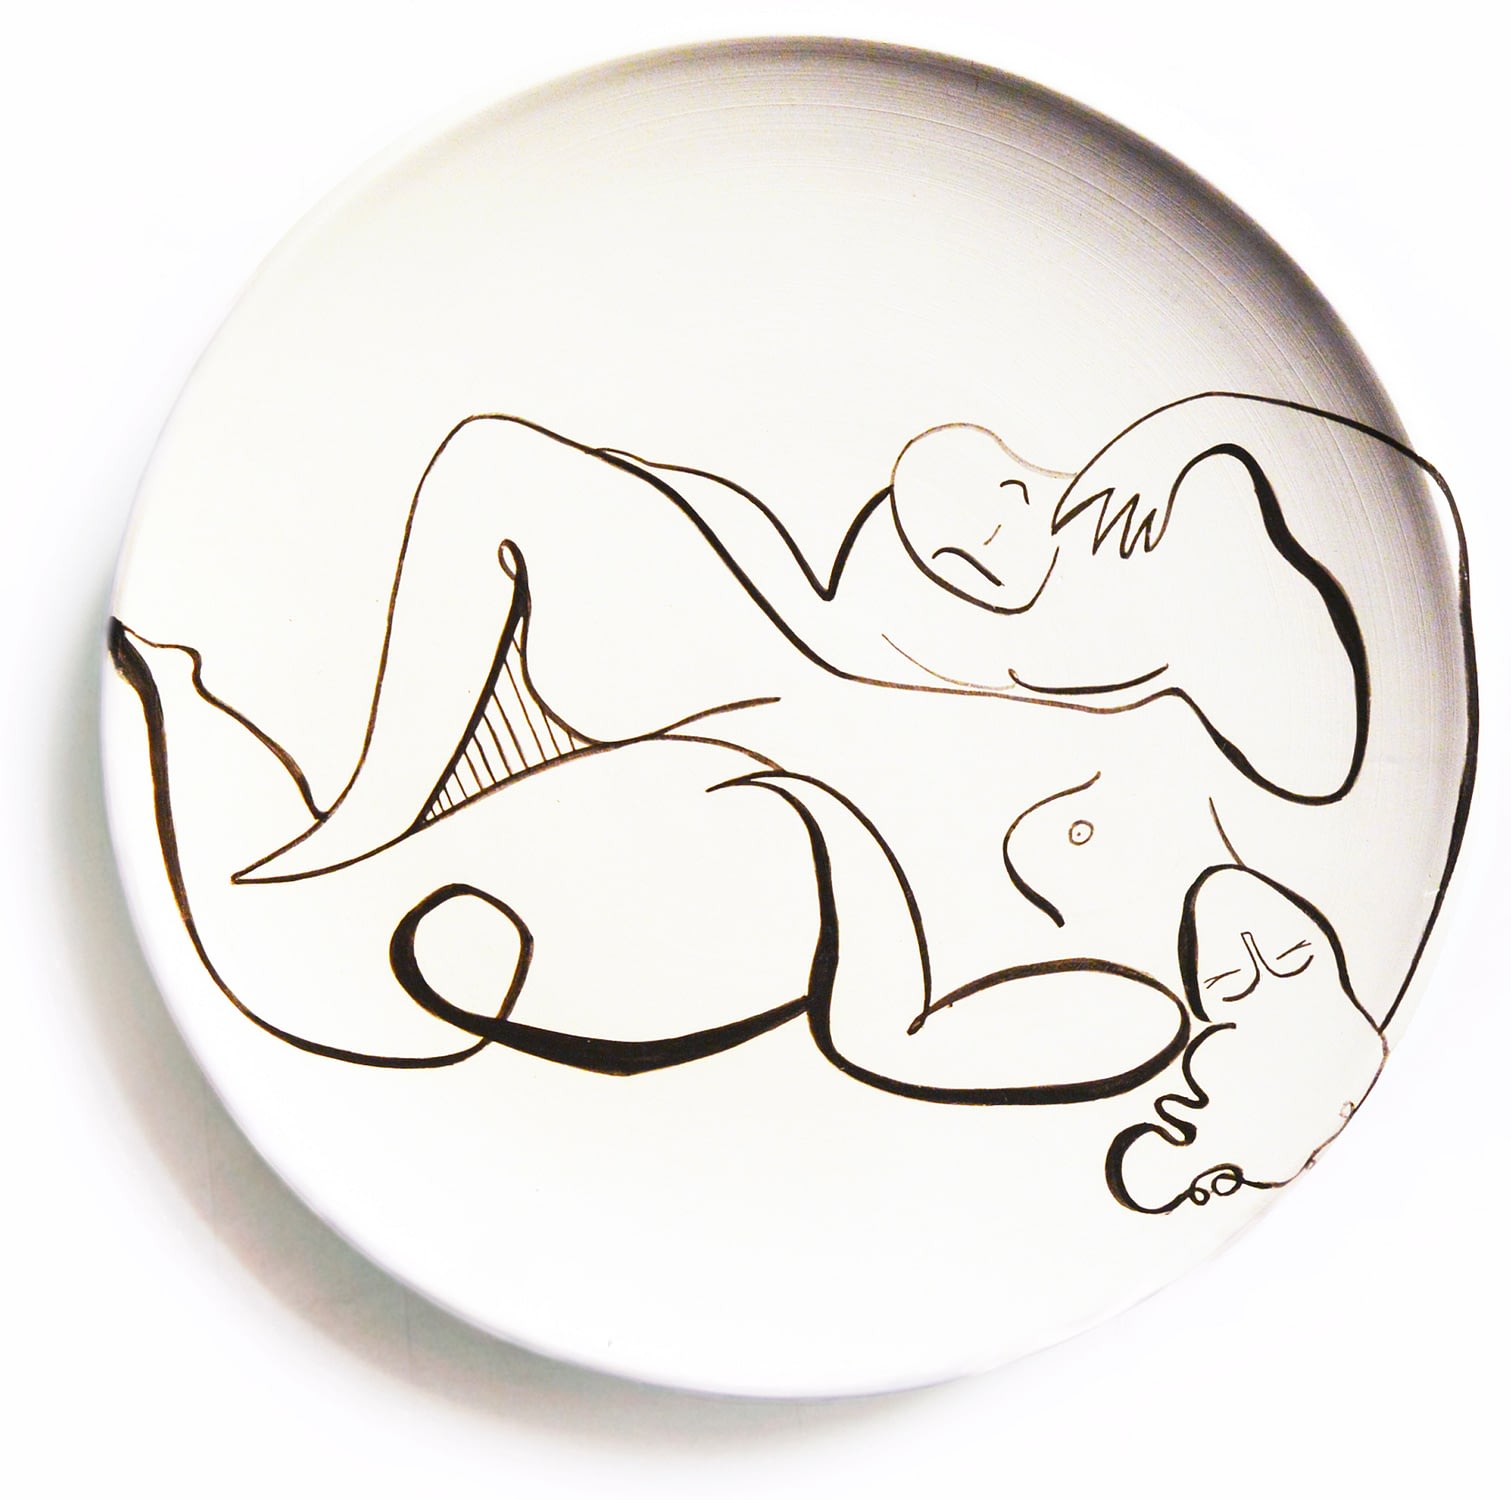 Andrea Santamarina Contemporary artist spain Art Gallery artistic ceramic drawing plates Love 11